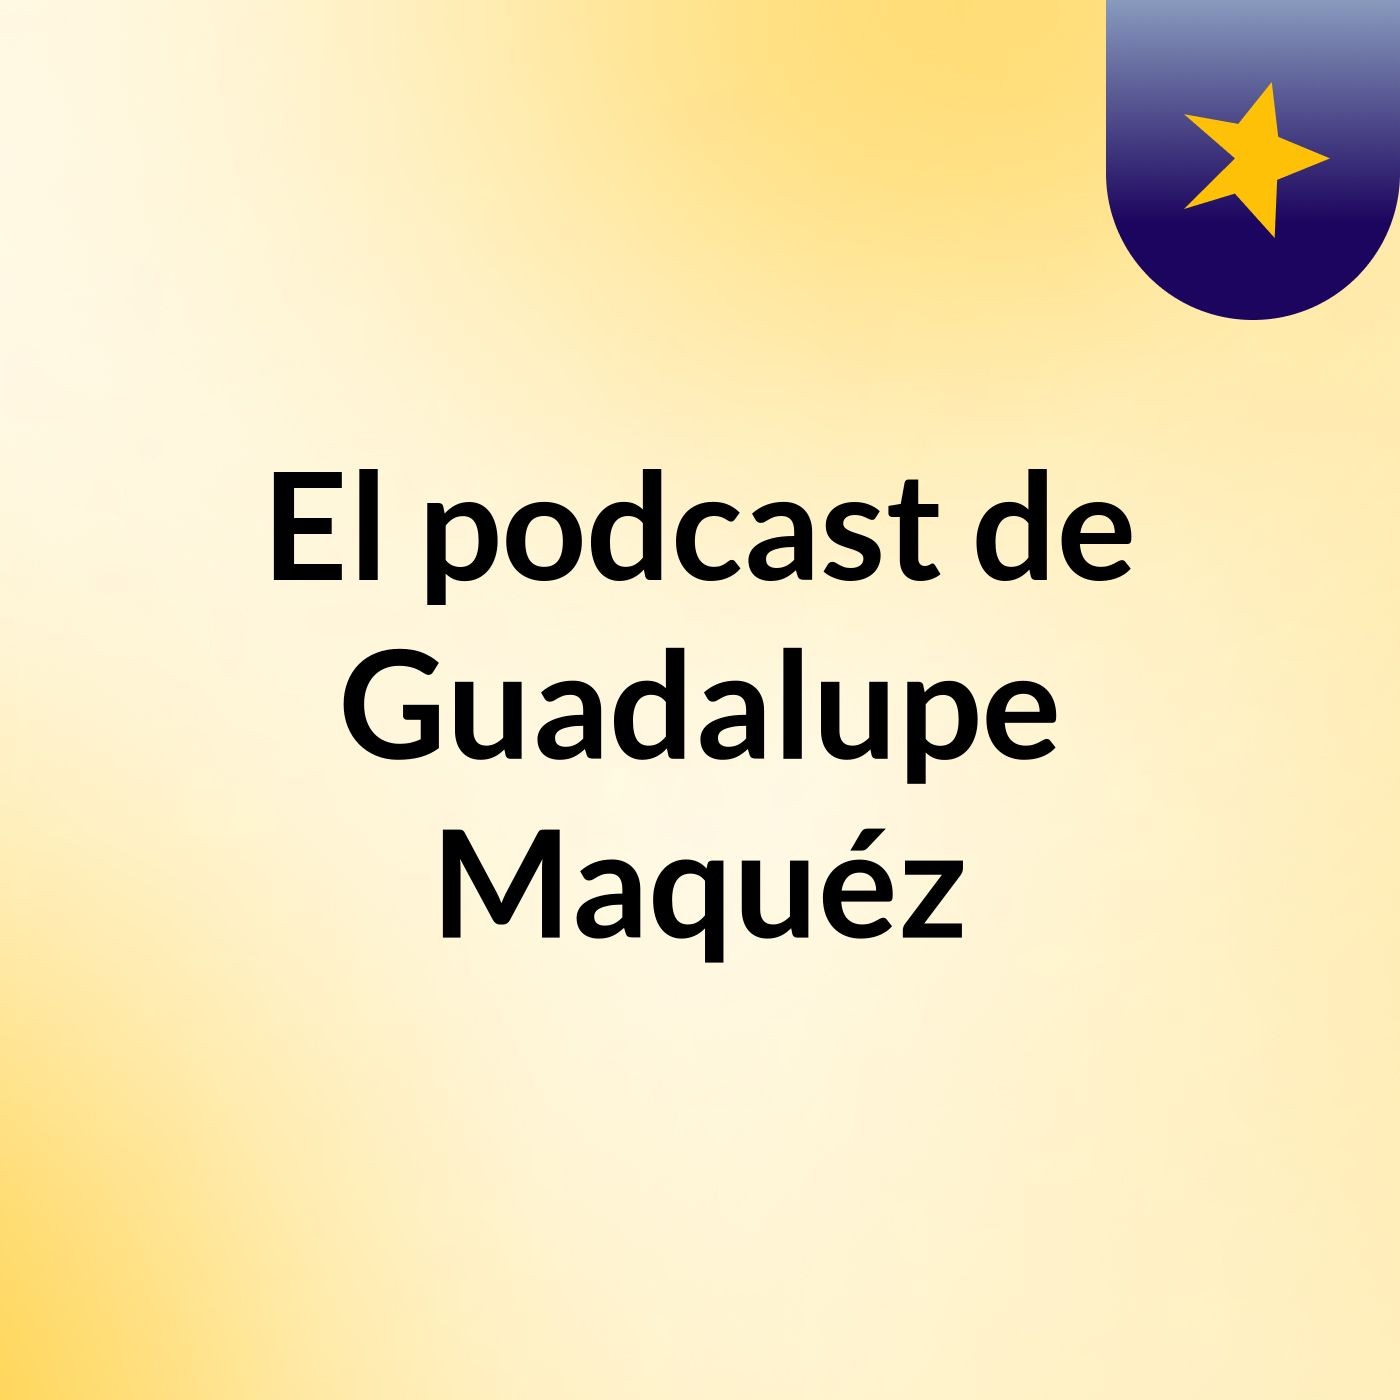 El podcast de Guadalupe Maquéz